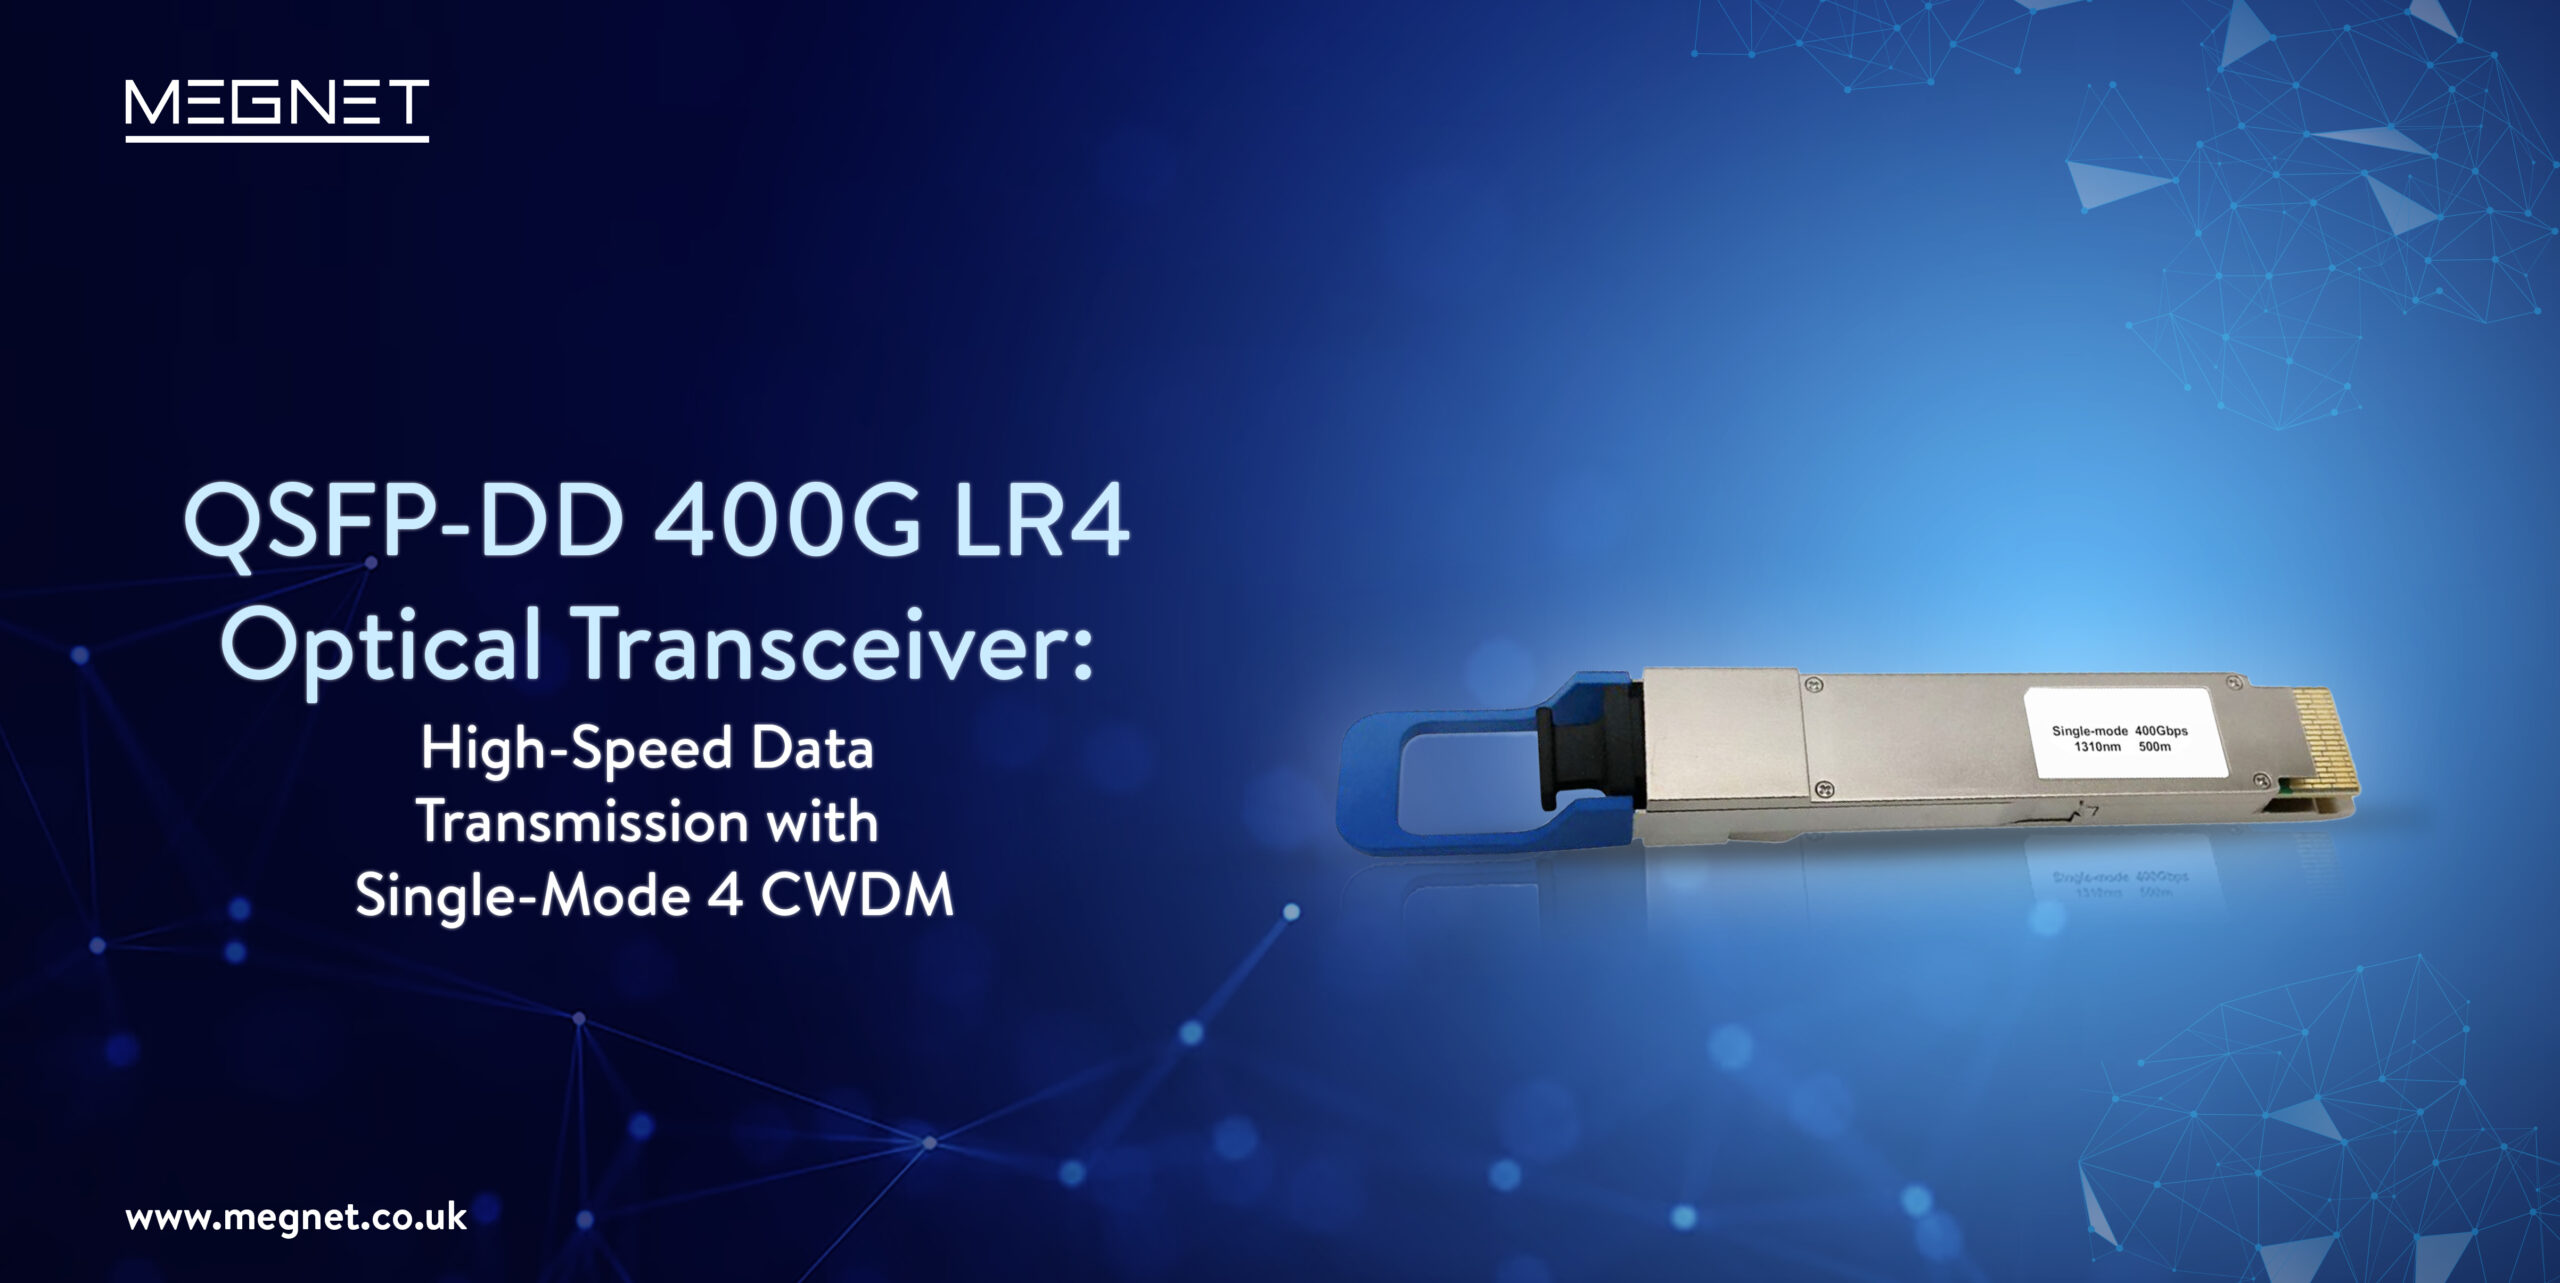 QSFP-DD 400G LR4 optical transceiver